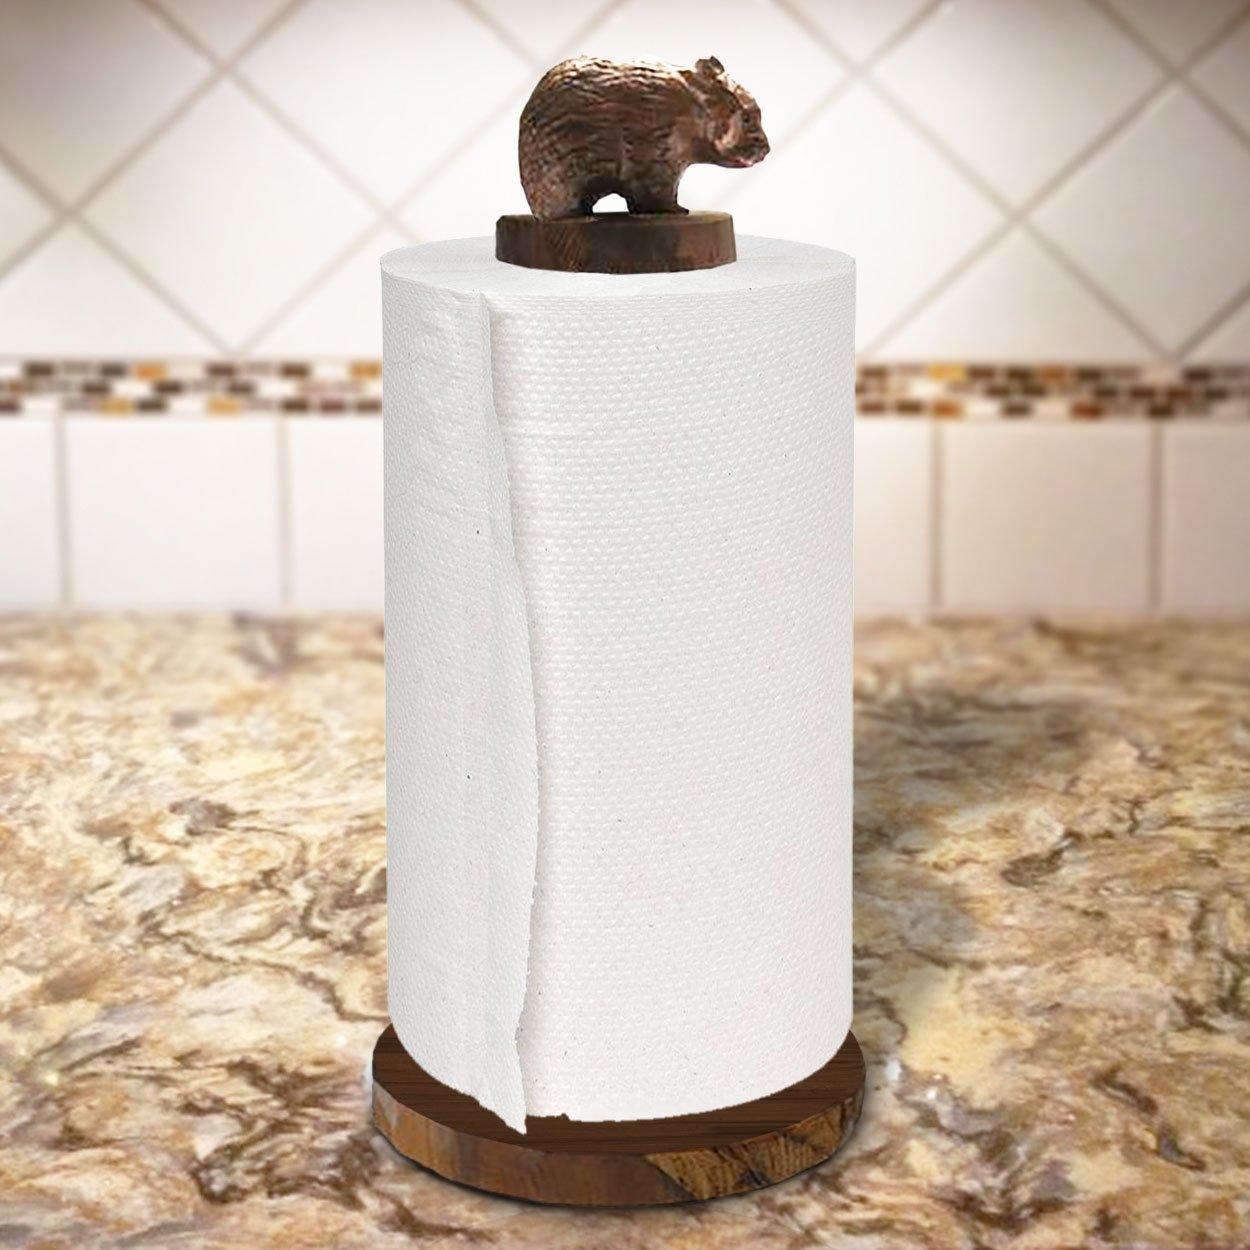 172053 - Rough Bear Ironwood Paper Towel Holder